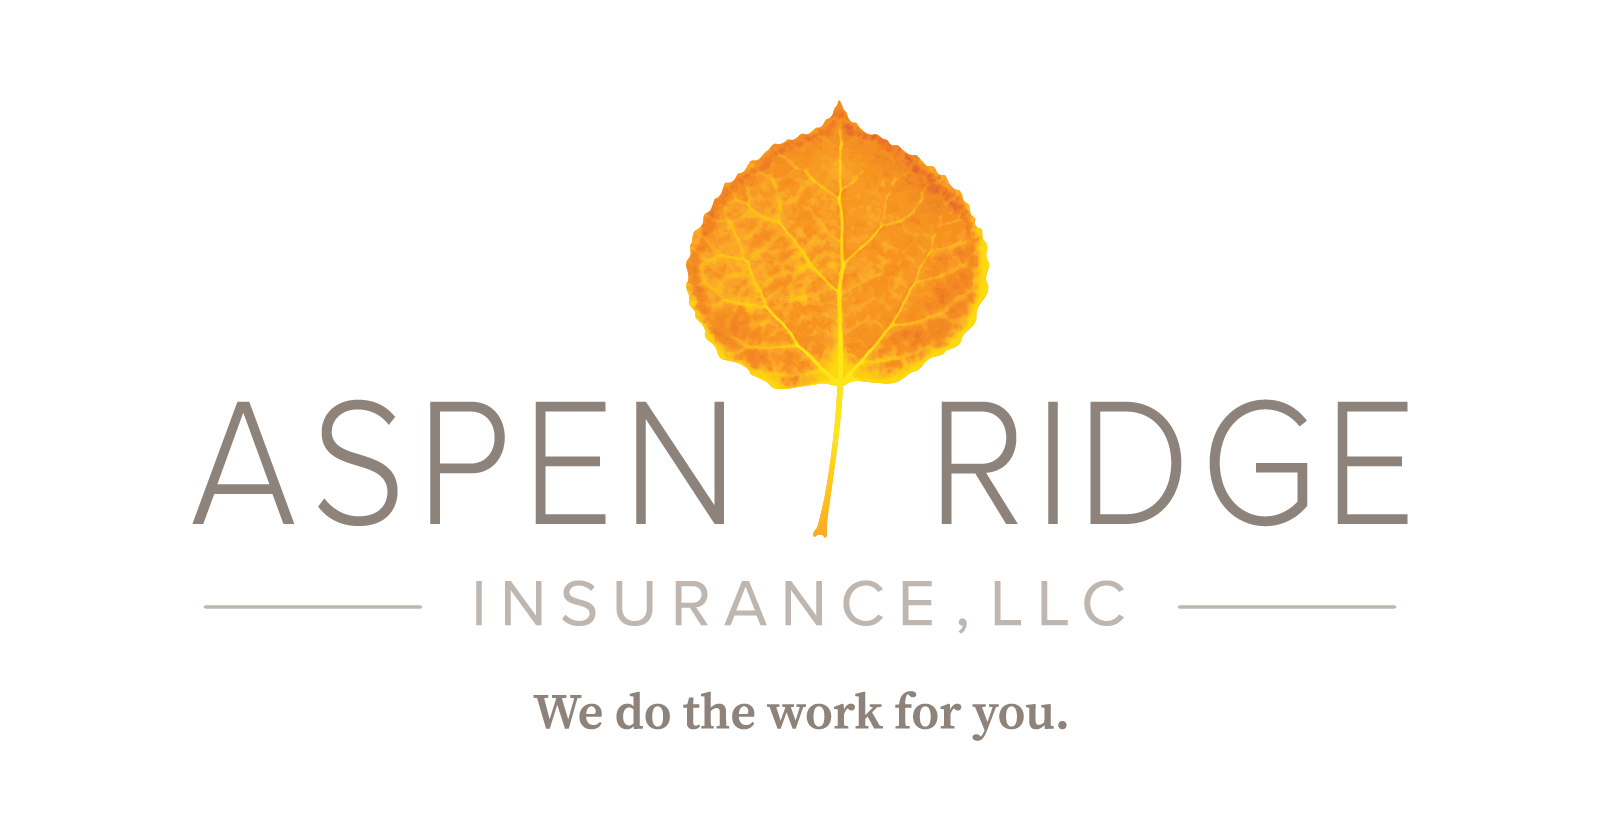 Aspen Ridge Insurance, LLC